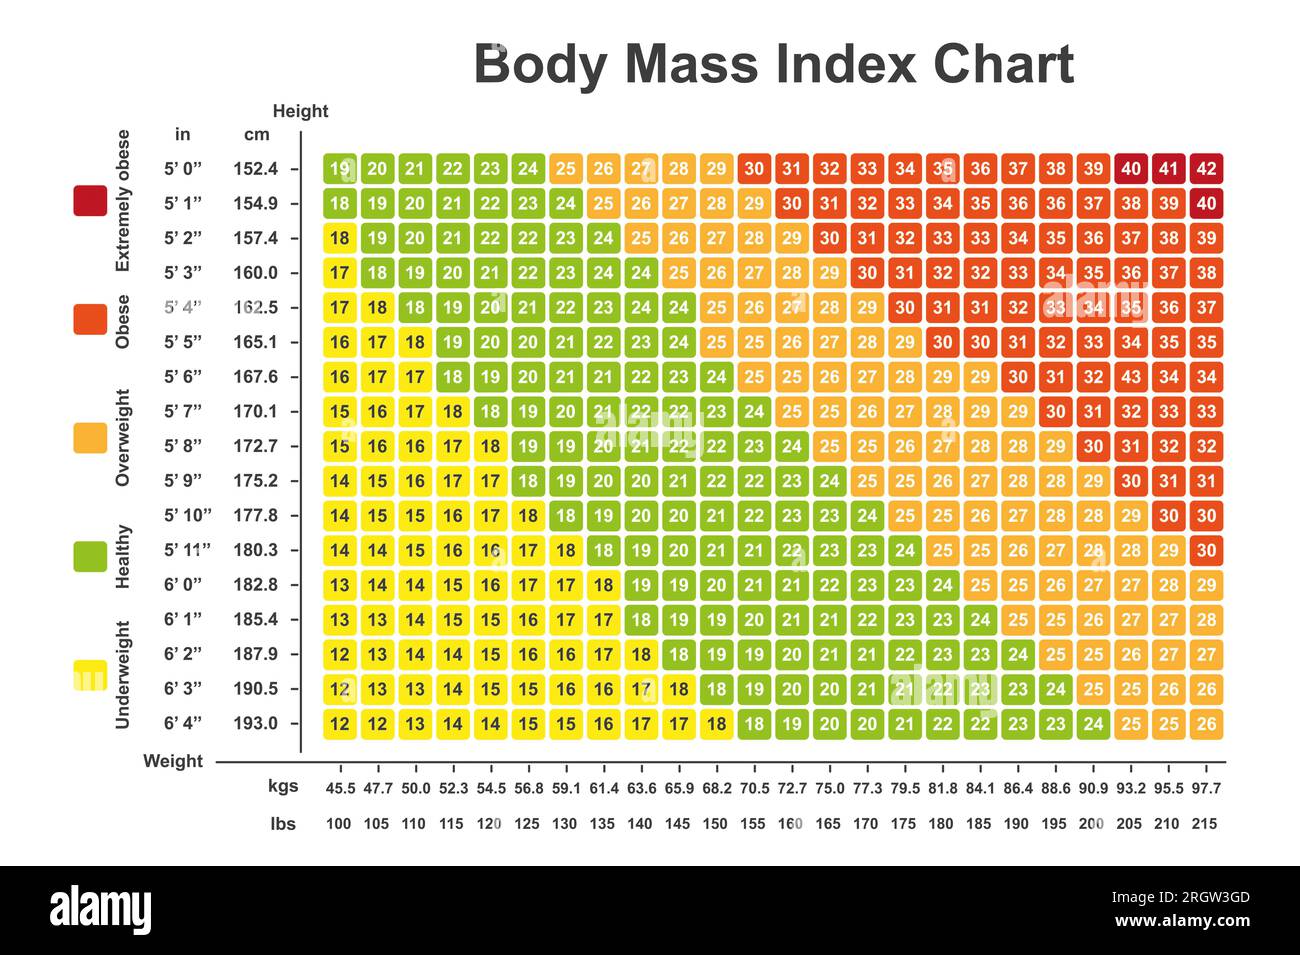 https://c8.alamy.com/comp/2RGW3GD/body-mass-index-chart-illustration-2RGW3GD.jpg